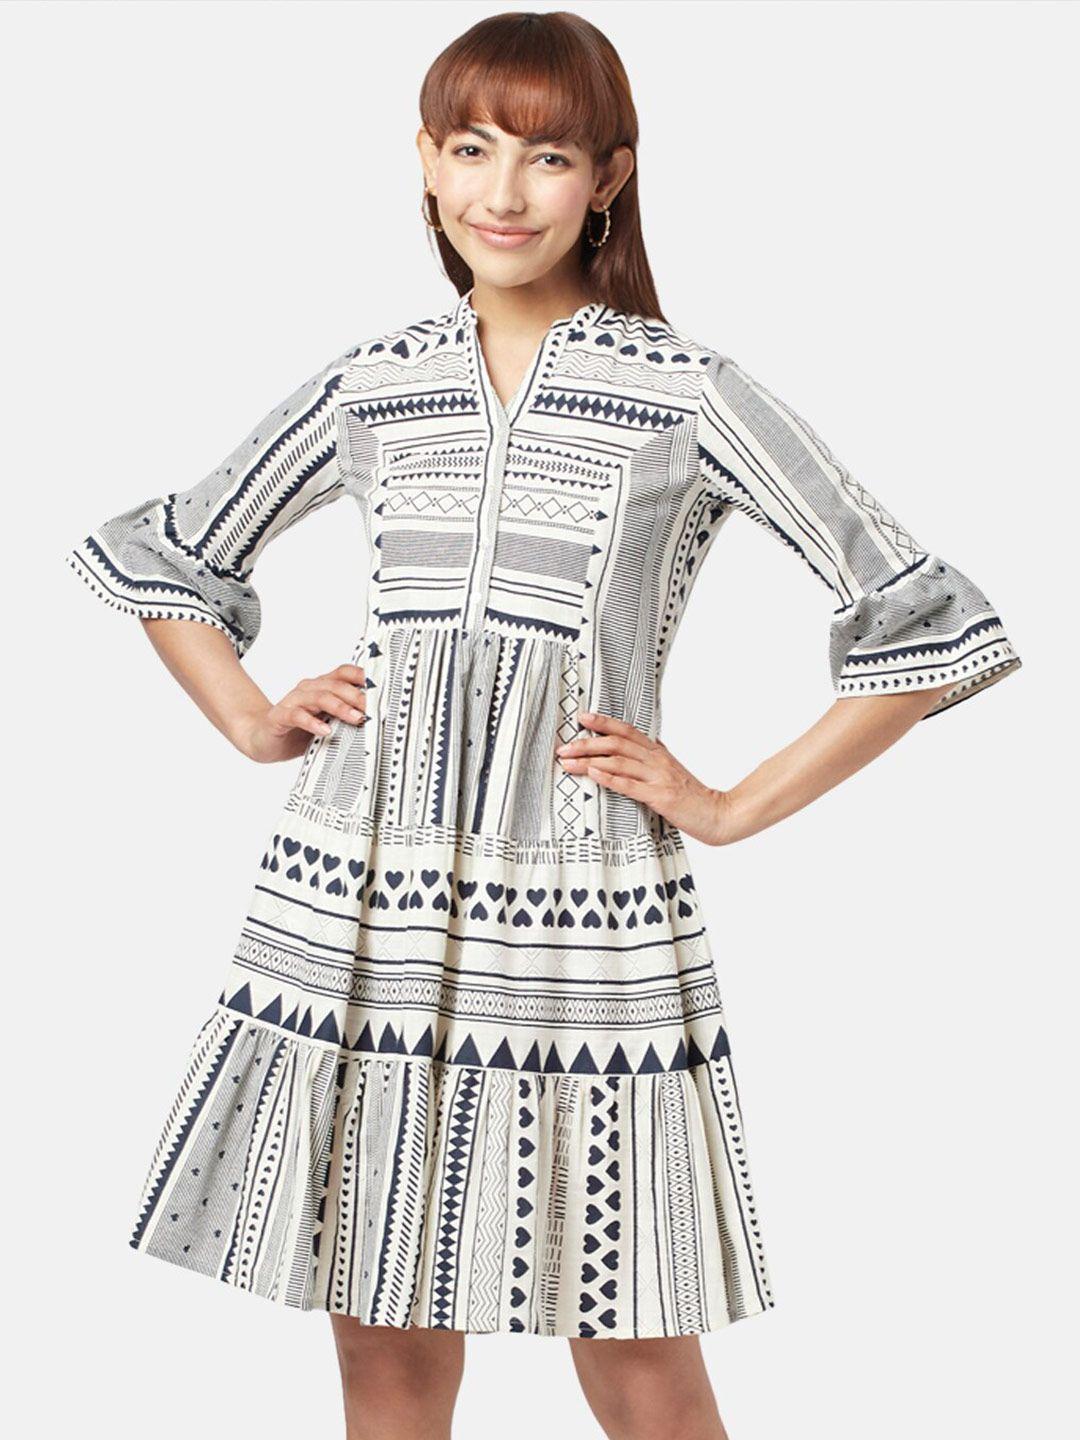 akkriti by pantaloons a-line cotton dress